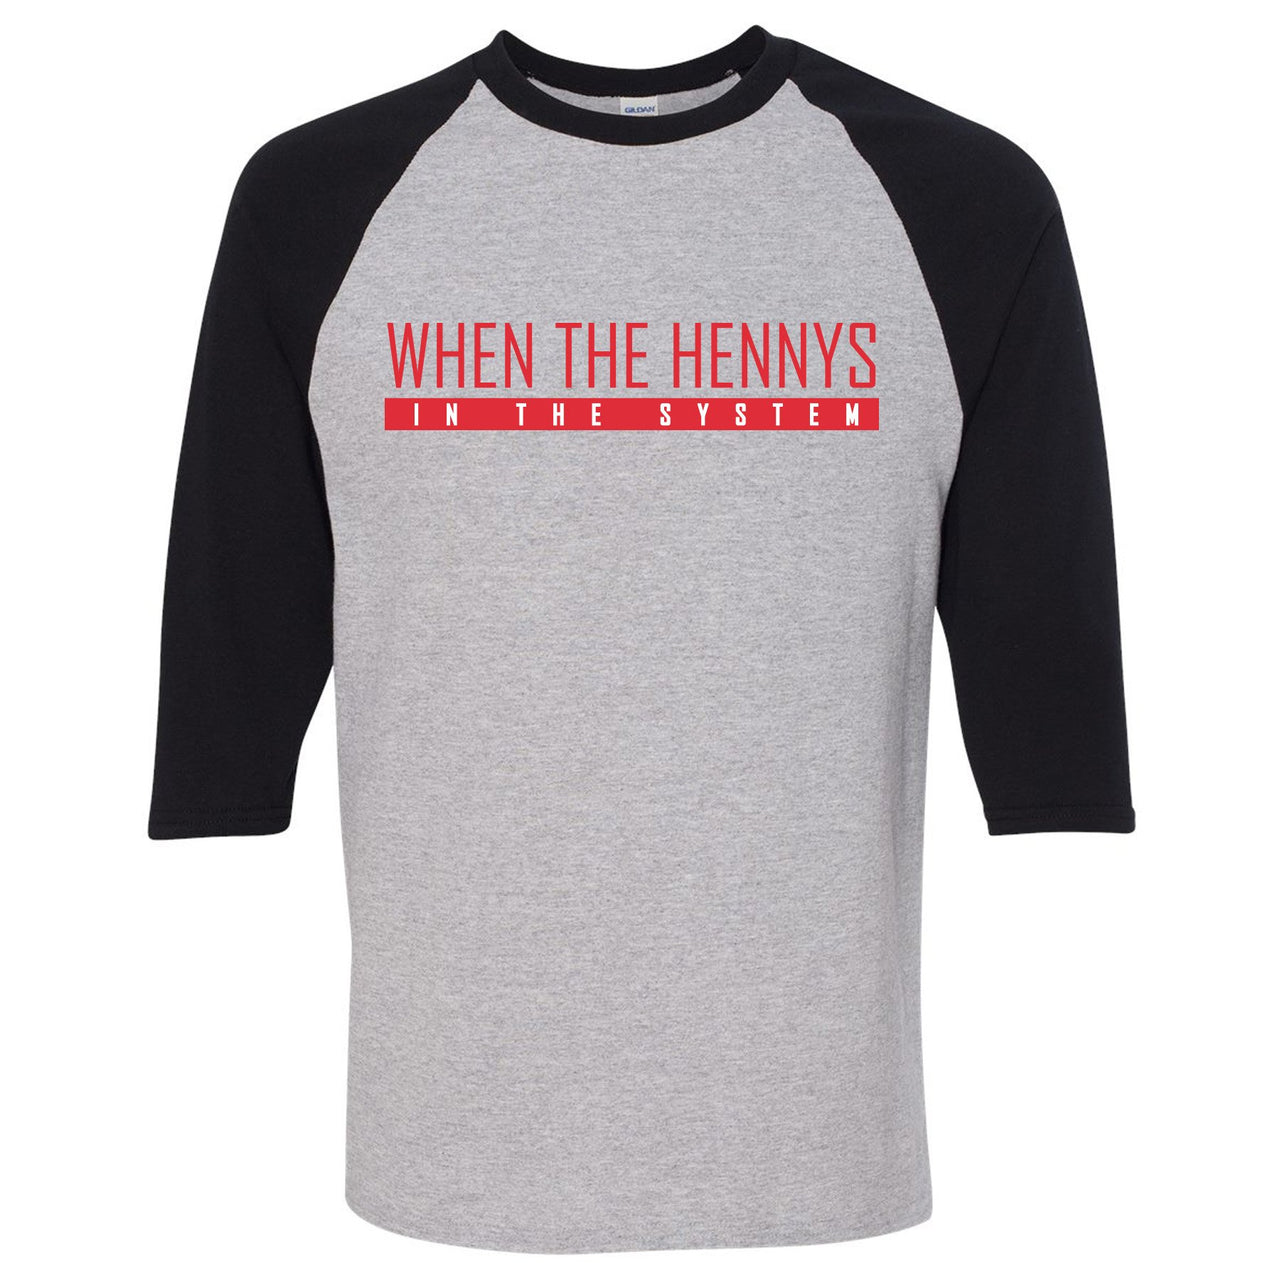 Bred 2019 4s Raglan T Shirt | When the Hennys, Sports Grey and Black